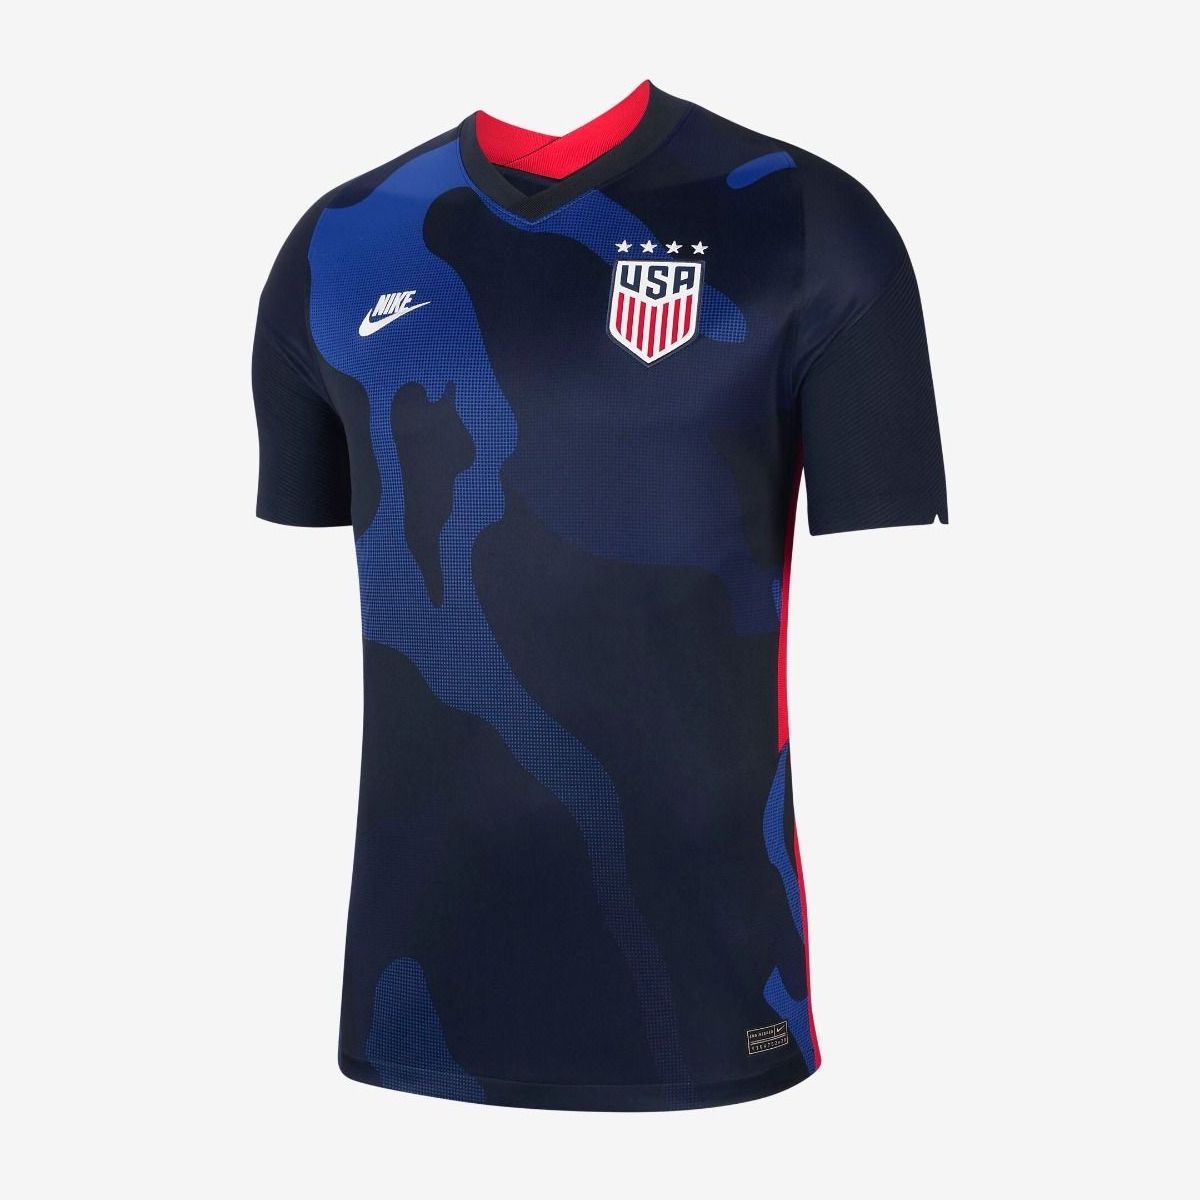 Nike 2020-21 USA Womens Away Jersey (Men's Cut) - Navy